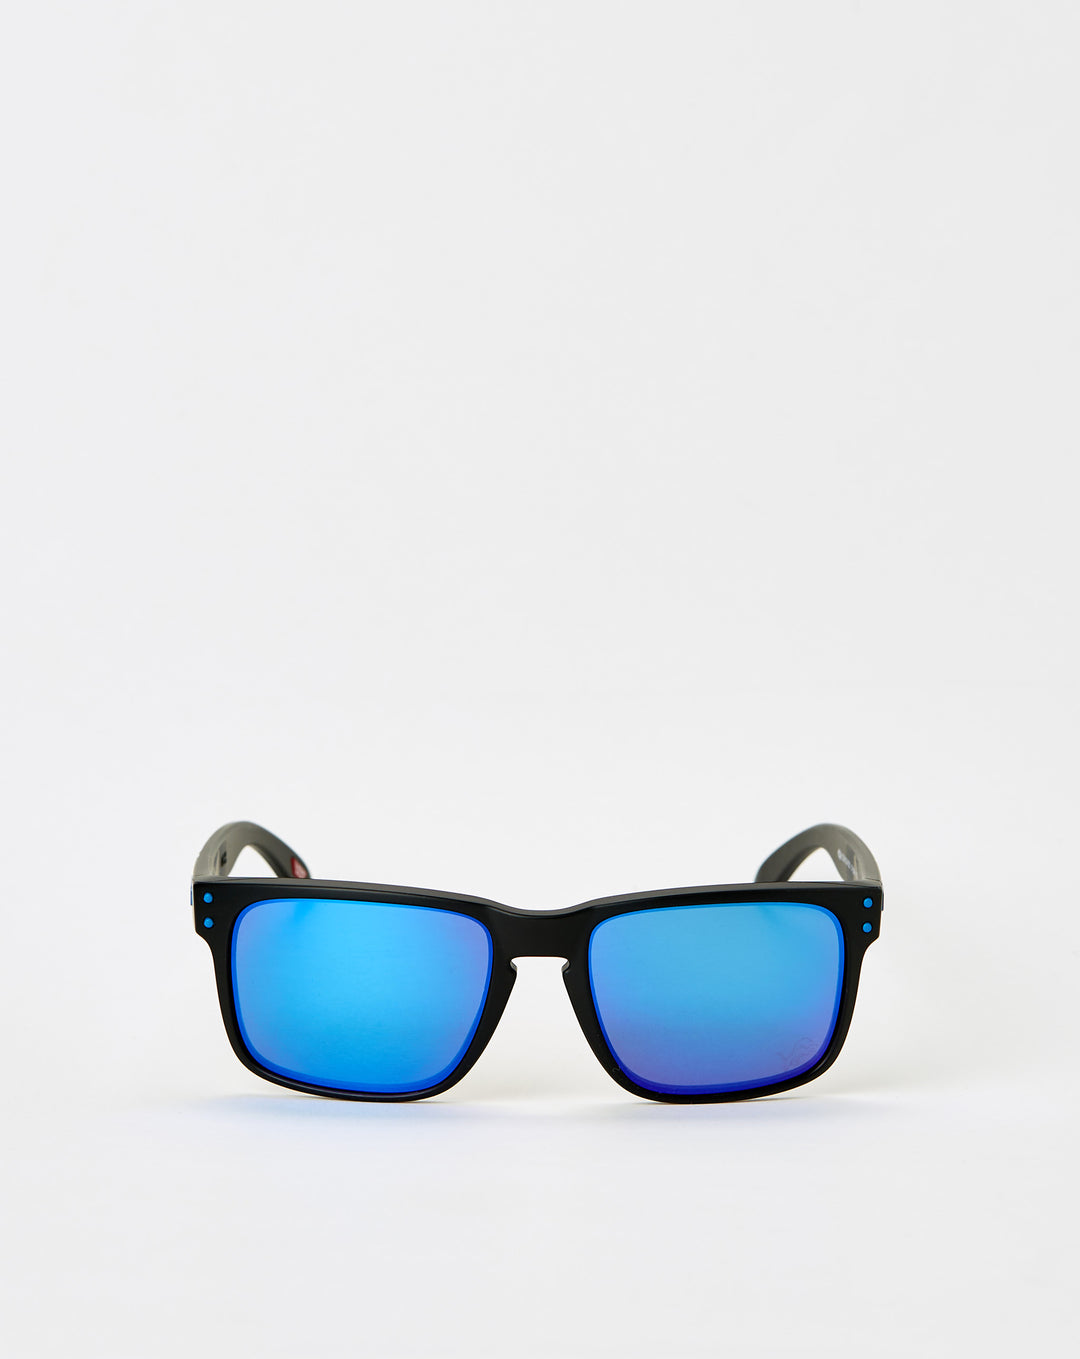 black xl sunglasses;